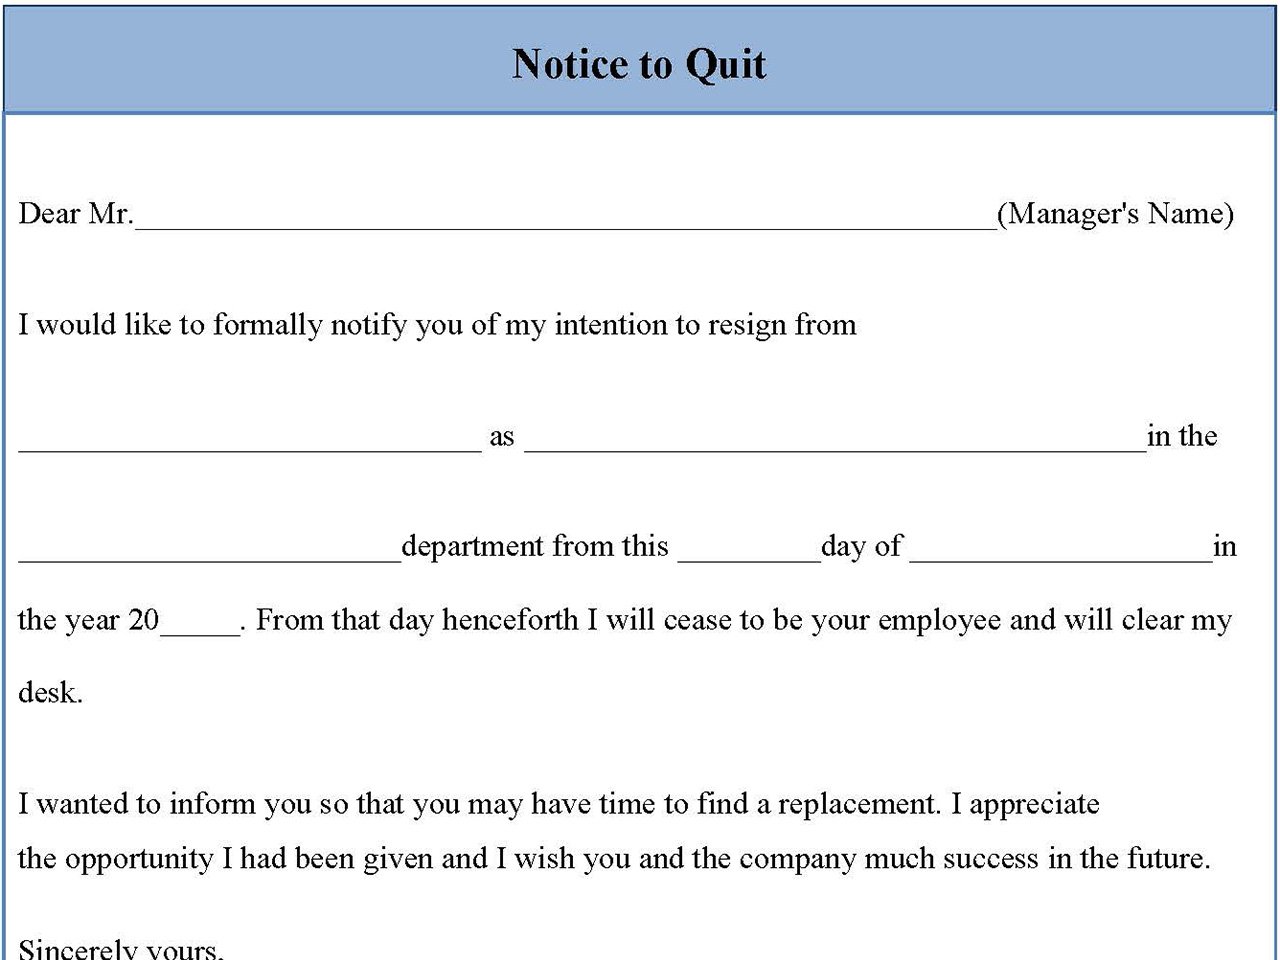 Notice to quit form